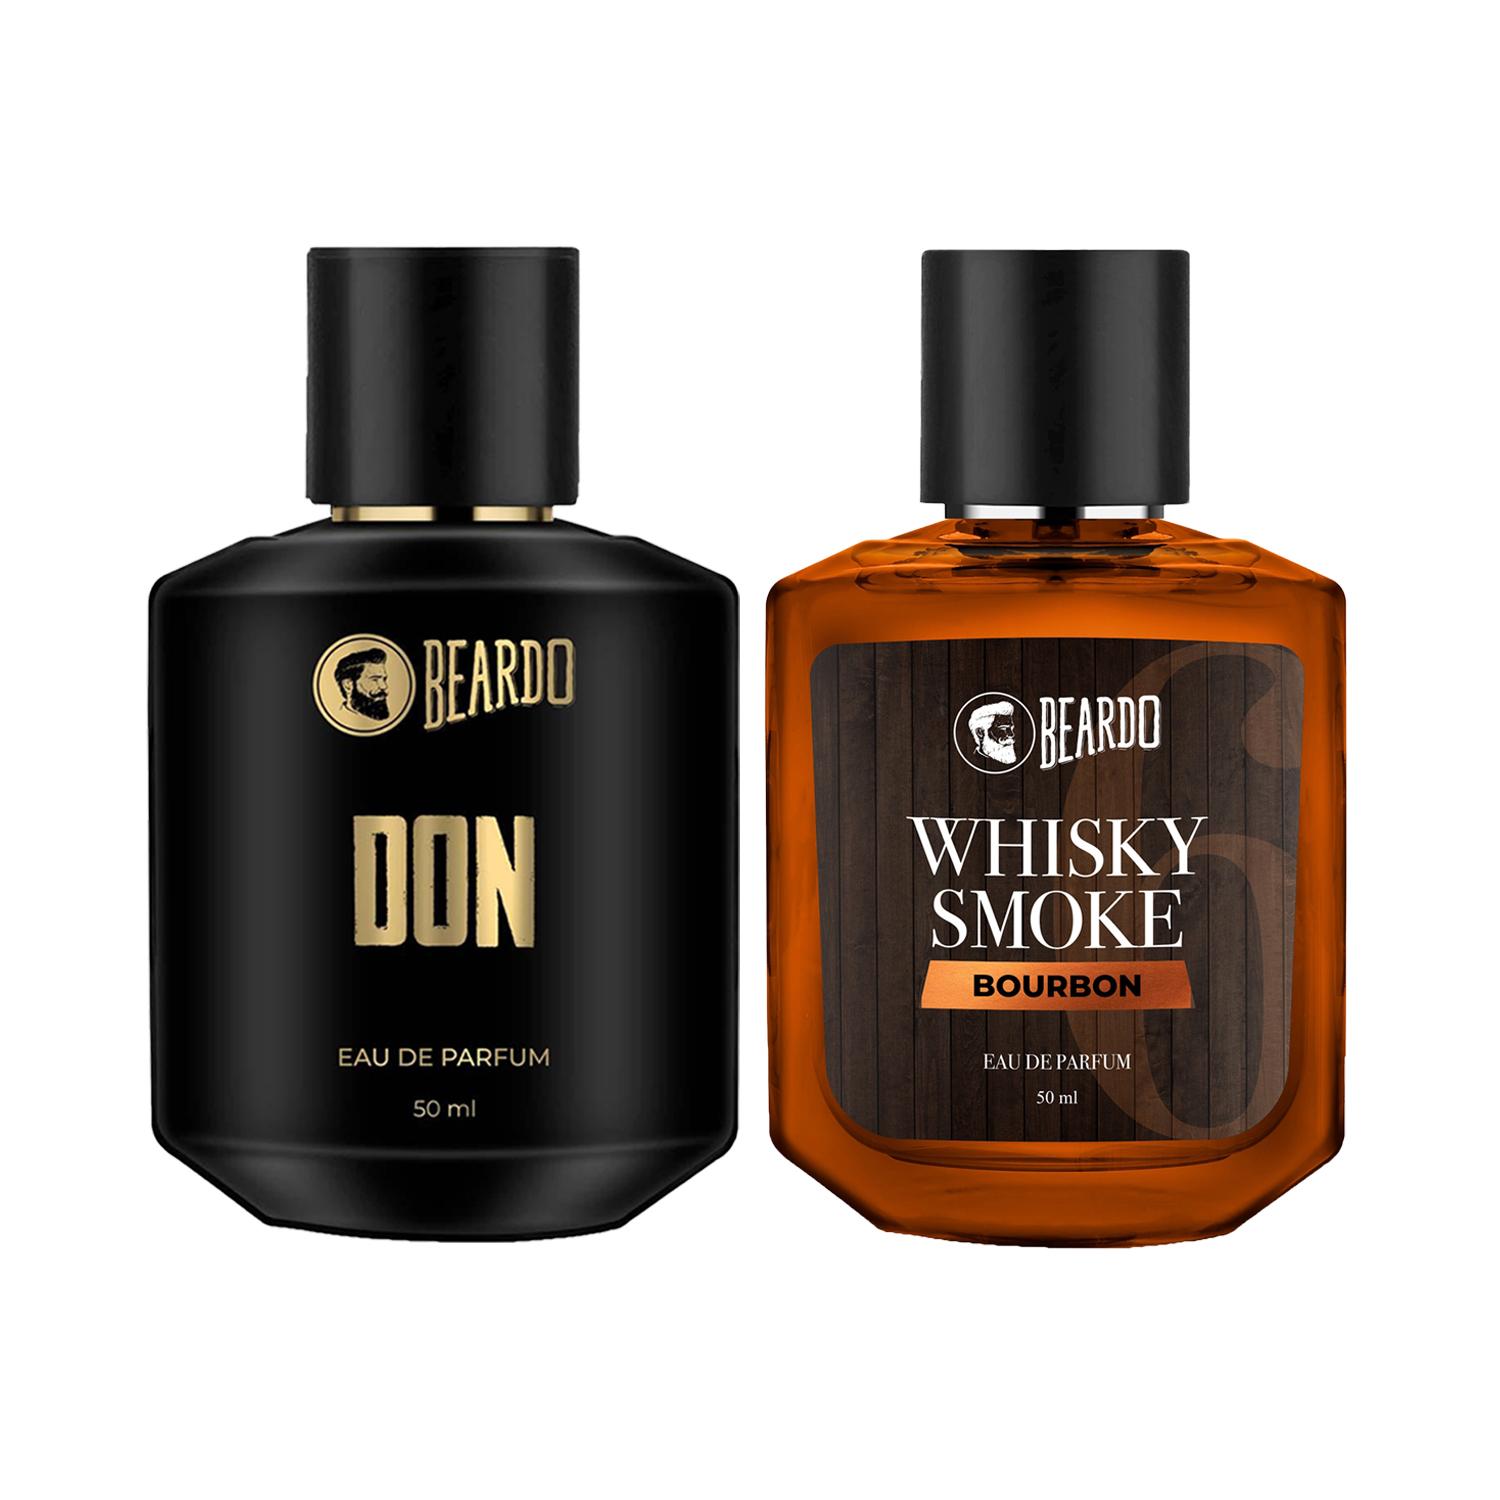 Beardo | Beardo Don Perfume Edp (50 ml) & Whisky Smoke Bourbon Eau De Parfum (50 ml) Combo